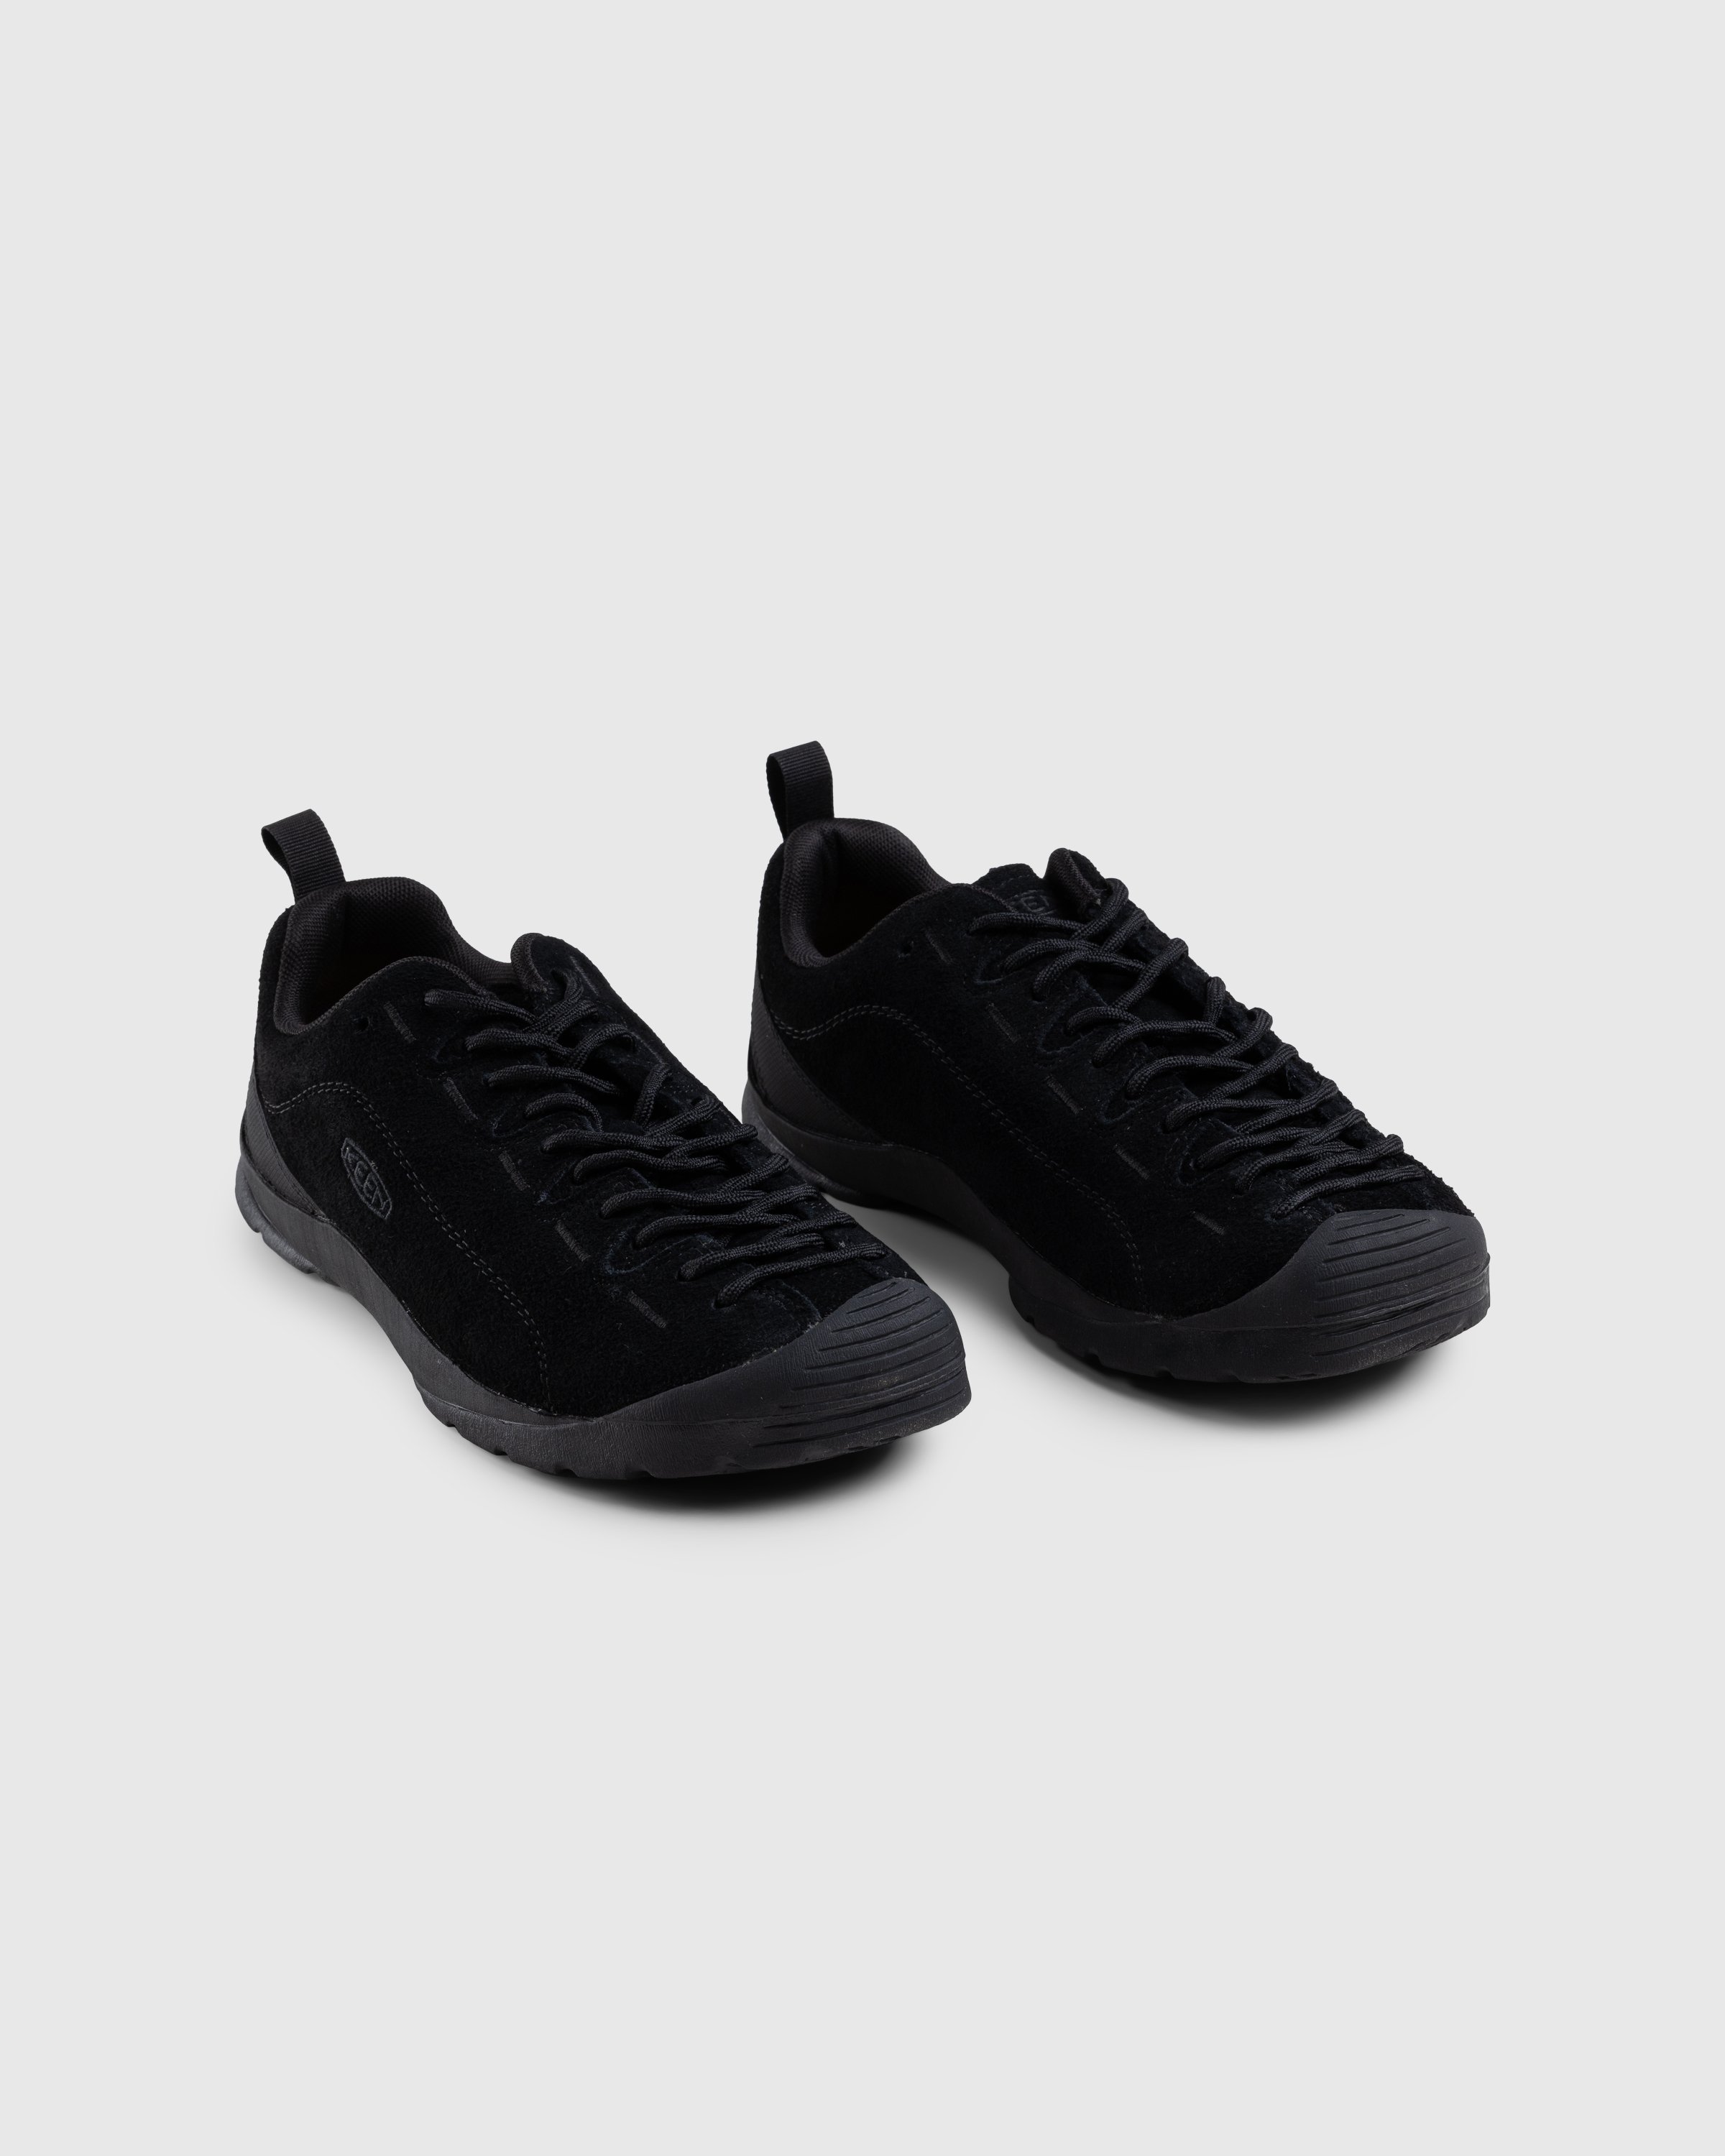 Keen - JASPER Black - Footwear - Black - Image 3